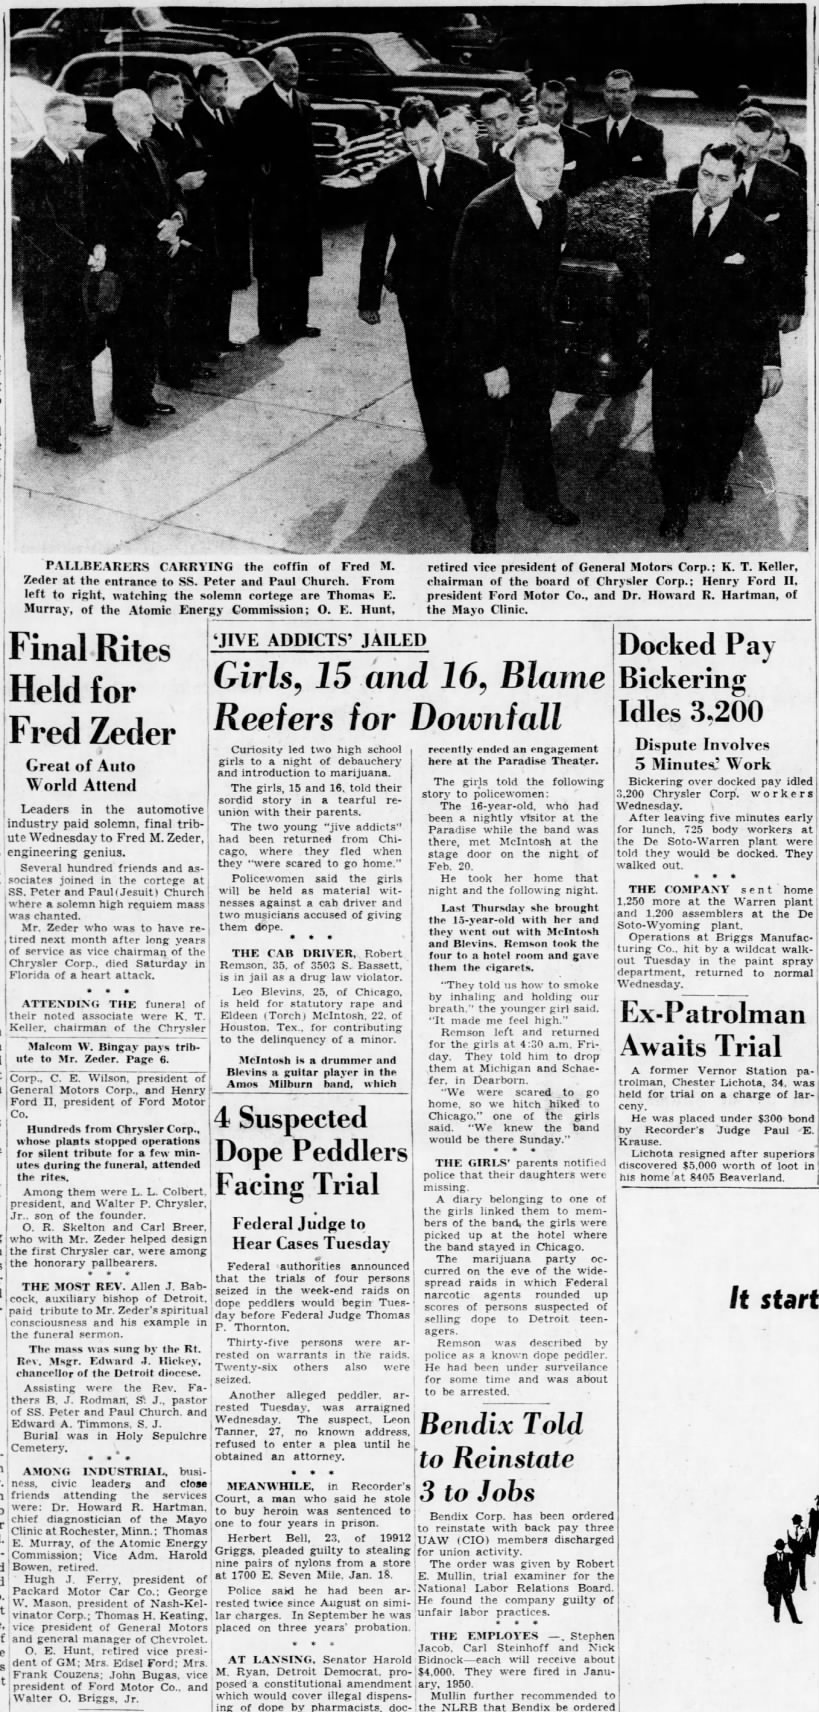 Final Rites Held for Fred Zeder; 1 Mar 1951; Detroit Free Press; 23